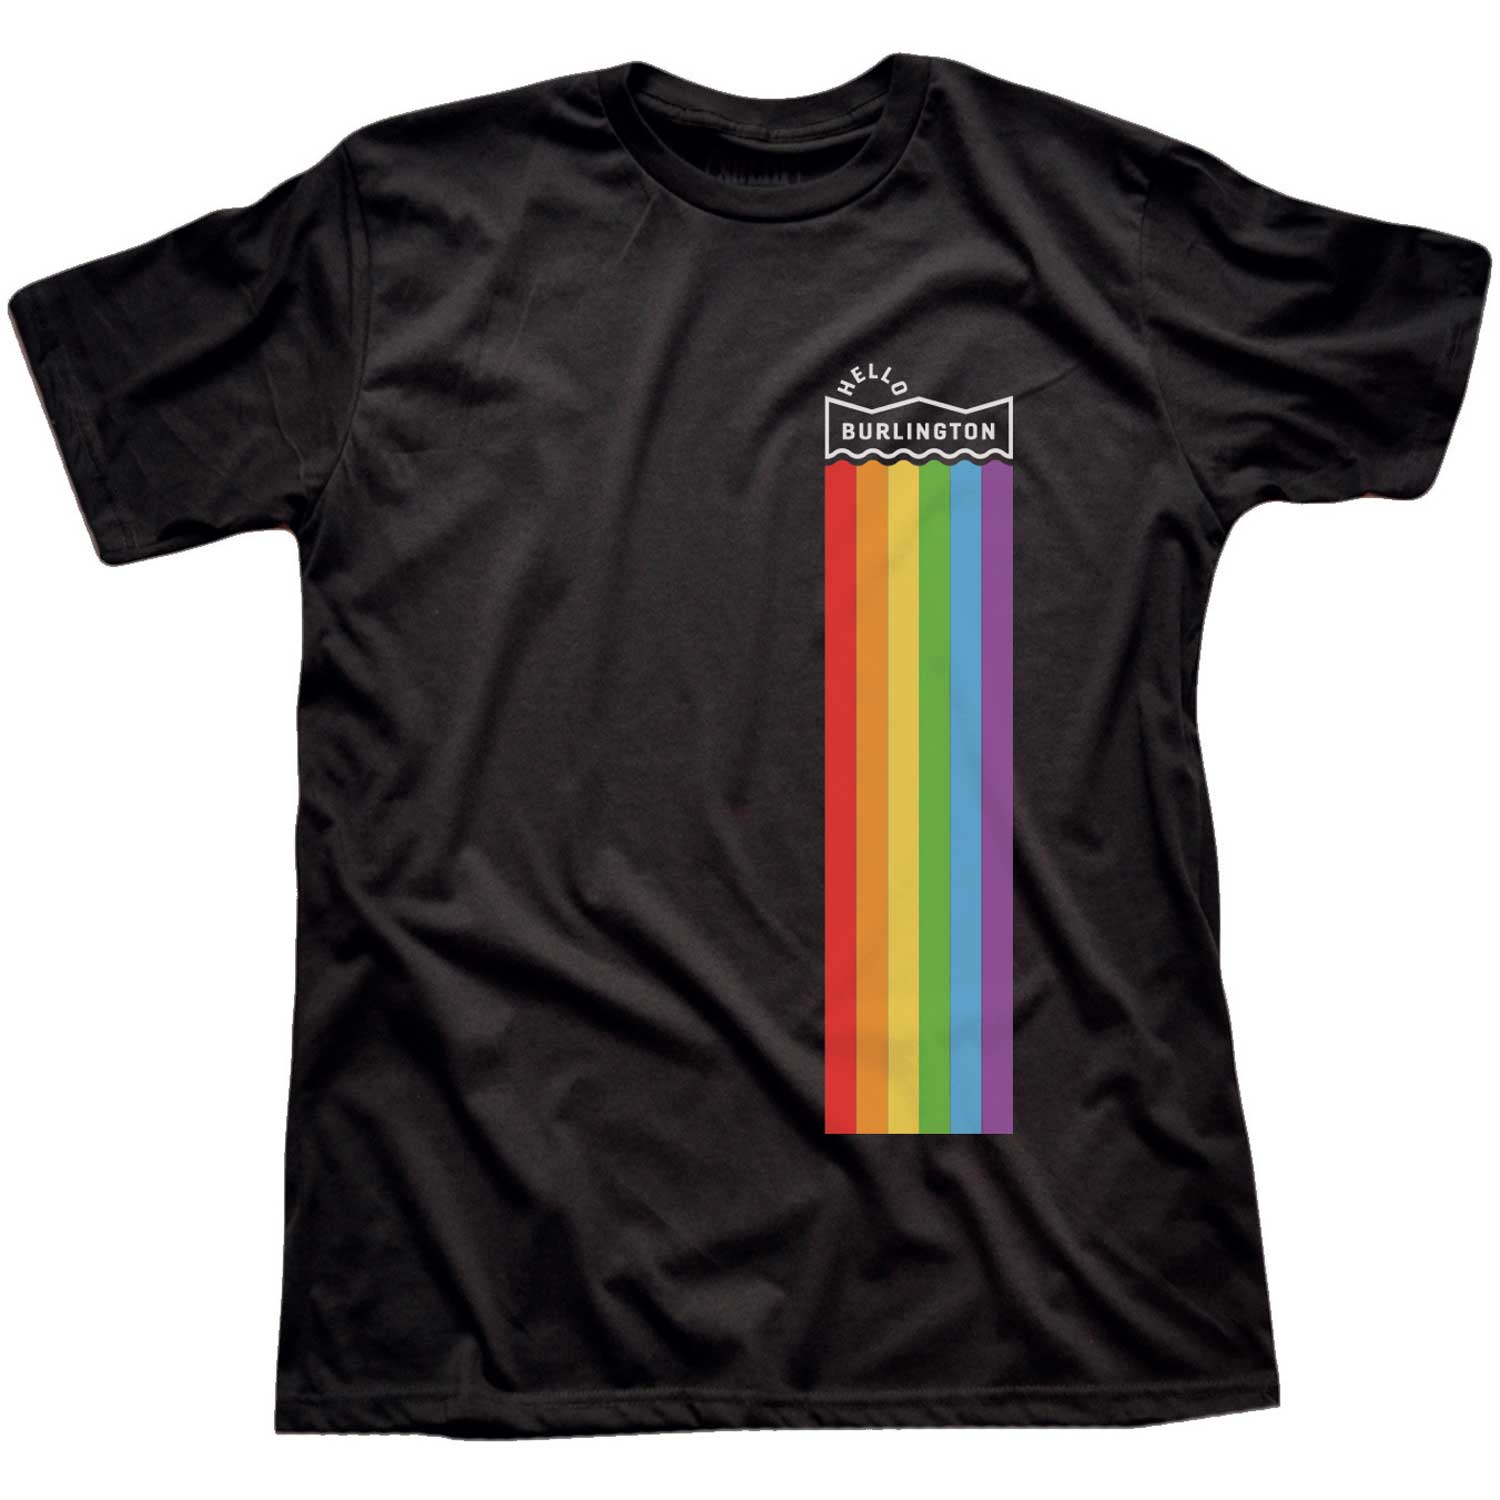 Men's Hello Burlington Cool Graphic T-Shirt | Vintage Vermont Pride Tee | Solid Threads